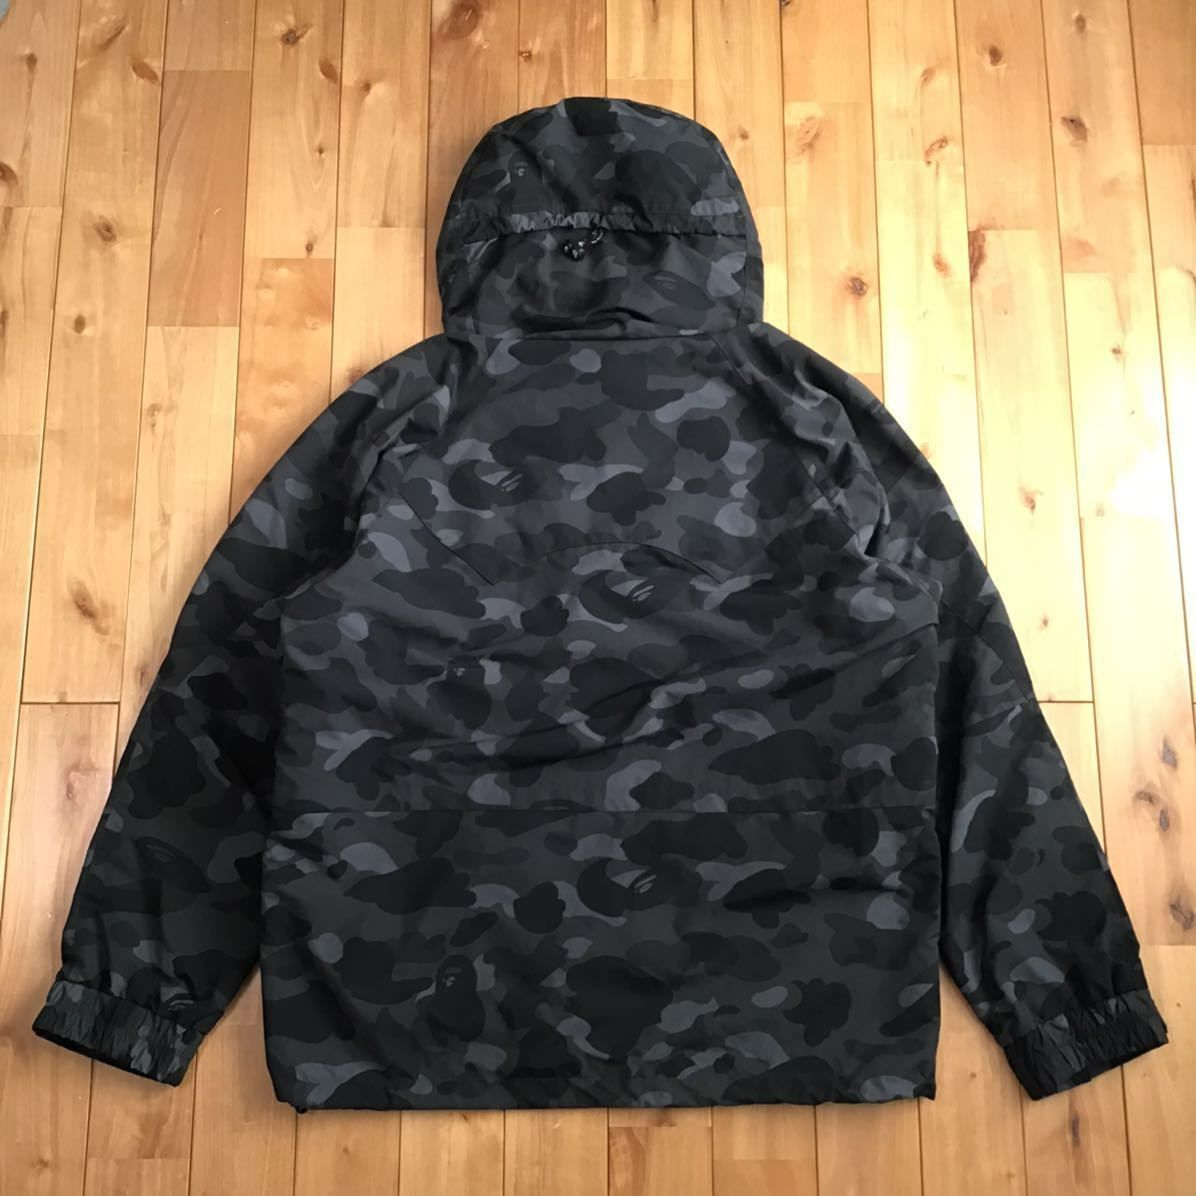 Black camo スノボジャケット Lサイズ a bathing ape BAPE hoodie 